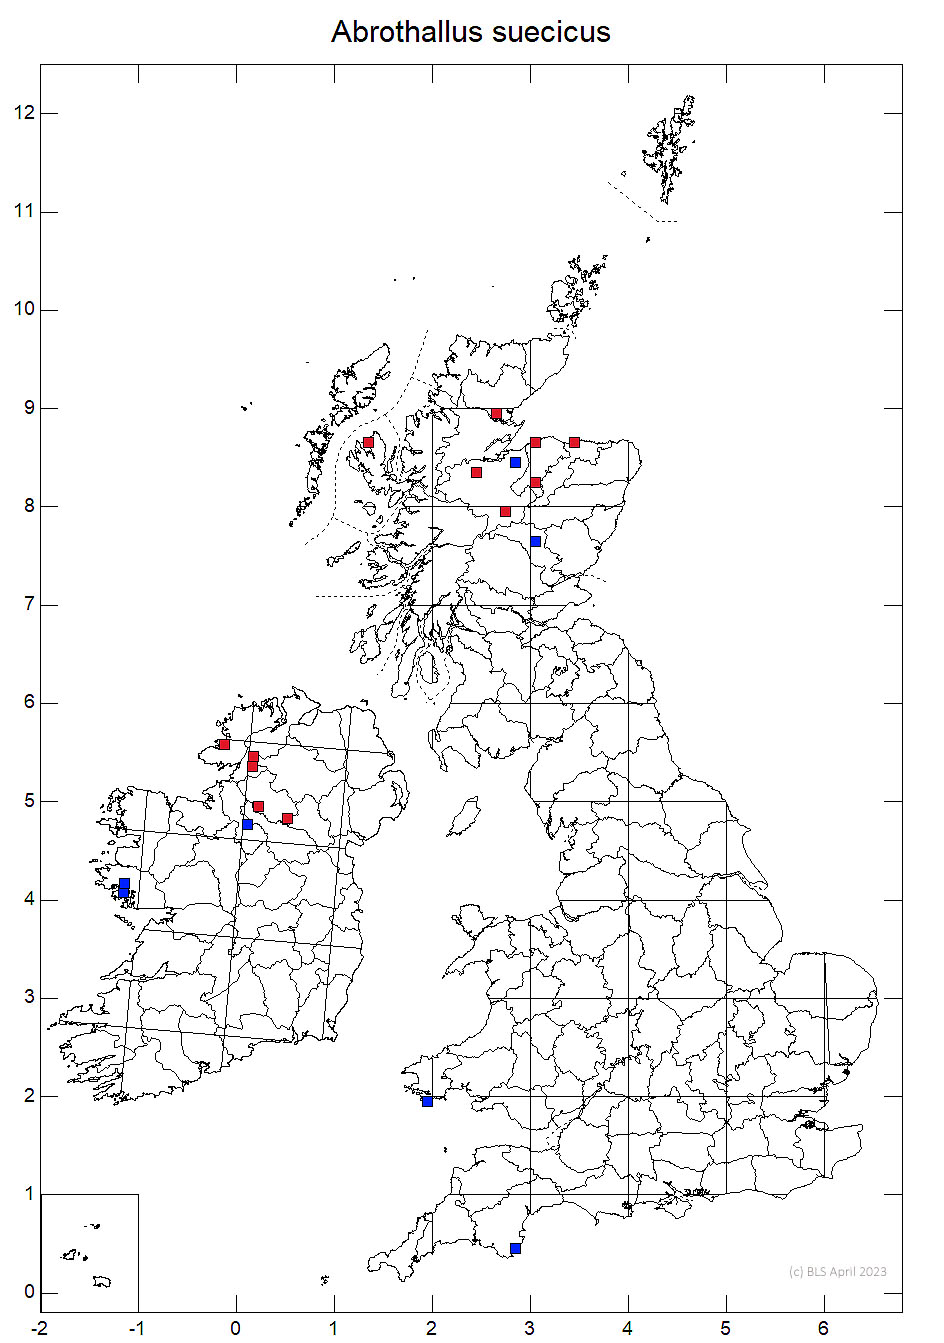 Abrothallus suecicus 10km sq distribution map